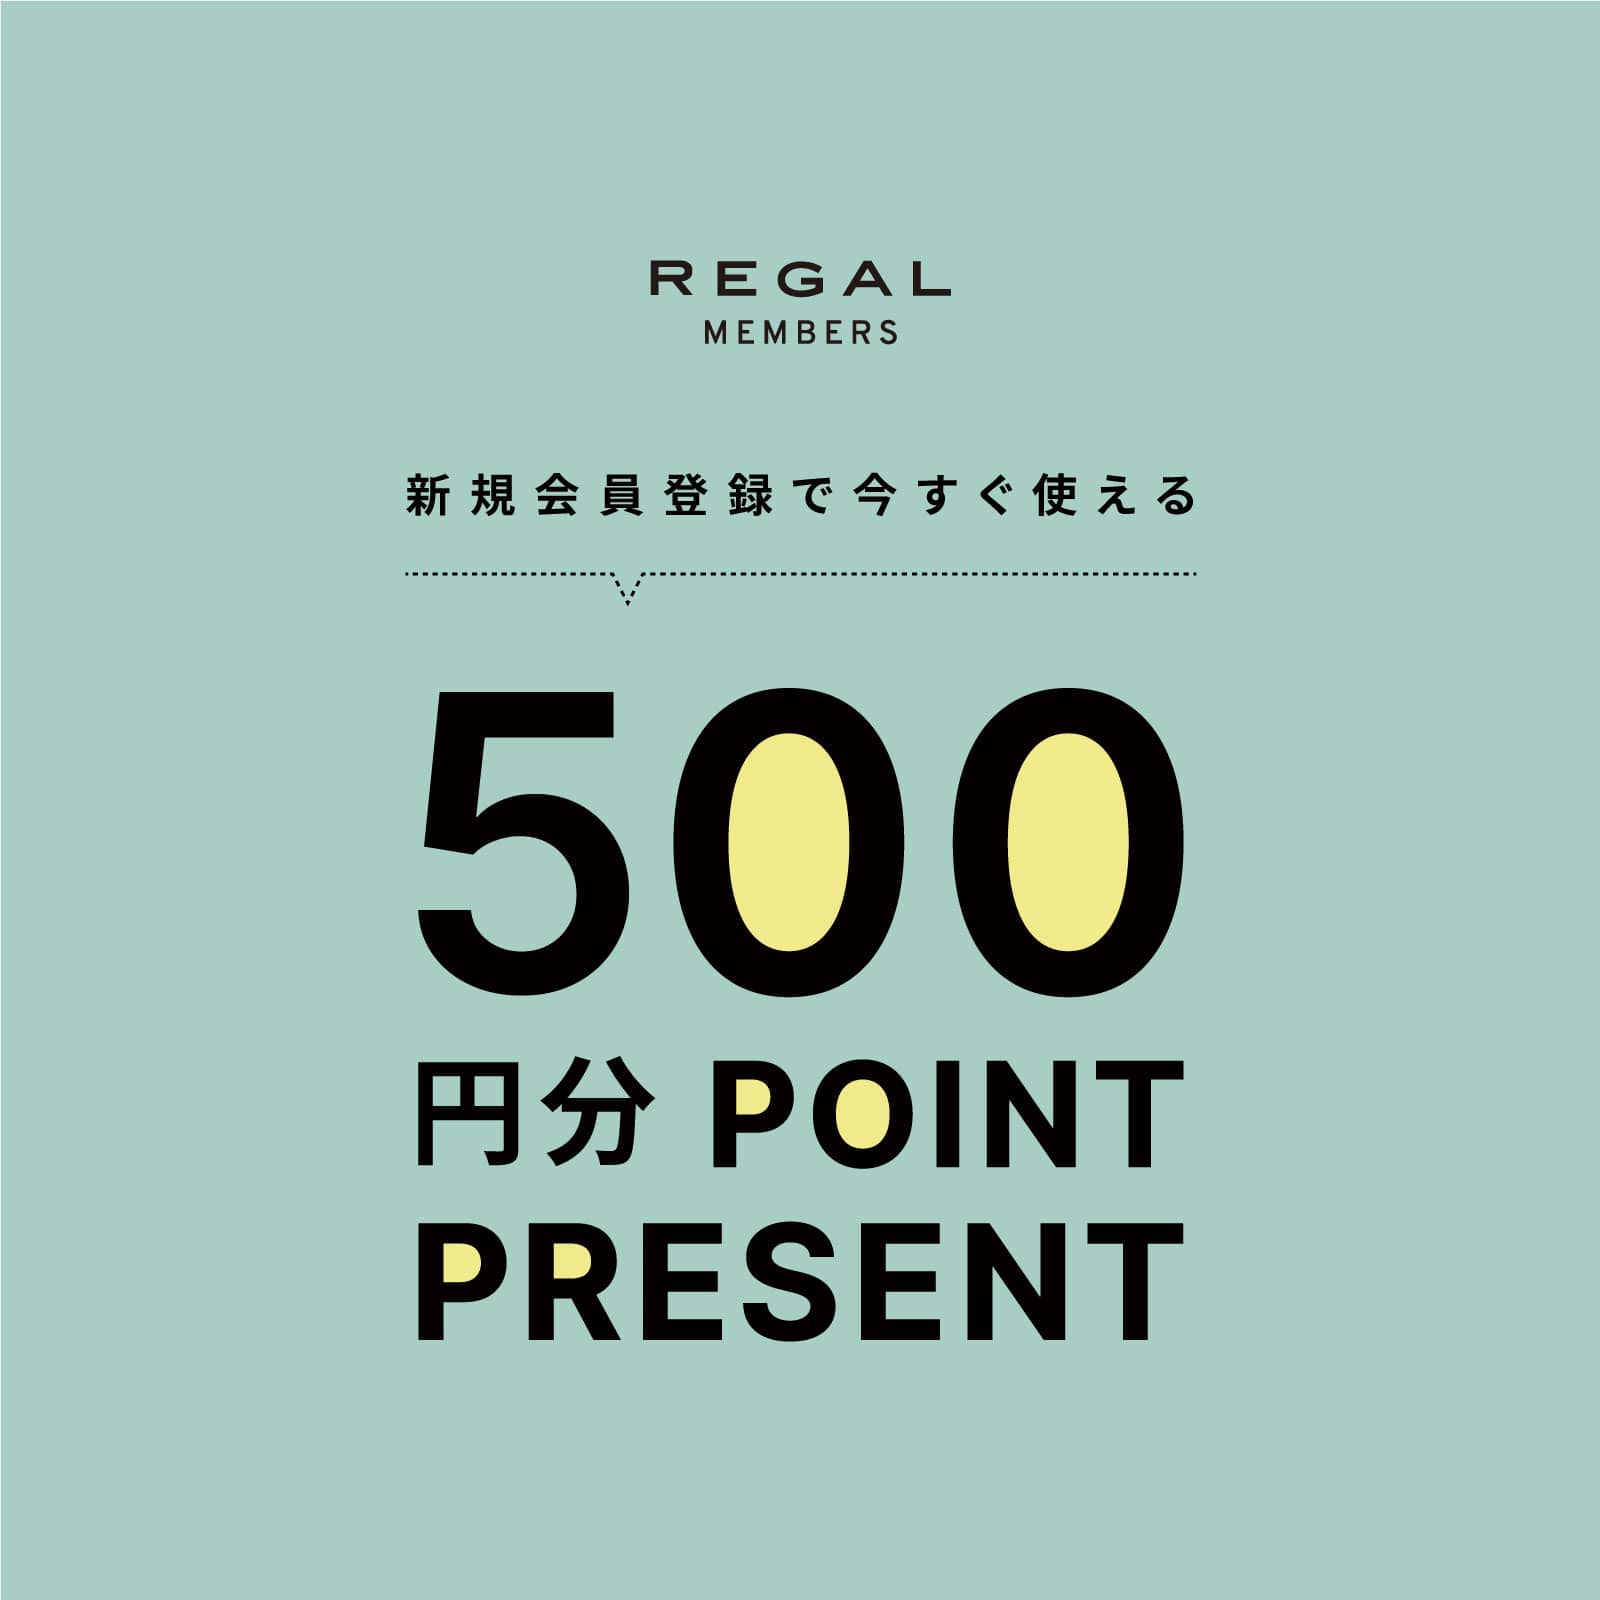 REGAL MEMBERS新規登録で今すぐ使える500ポイントプレゼント | 株式会社リーガルコーポレーション REGAL CORPORATION